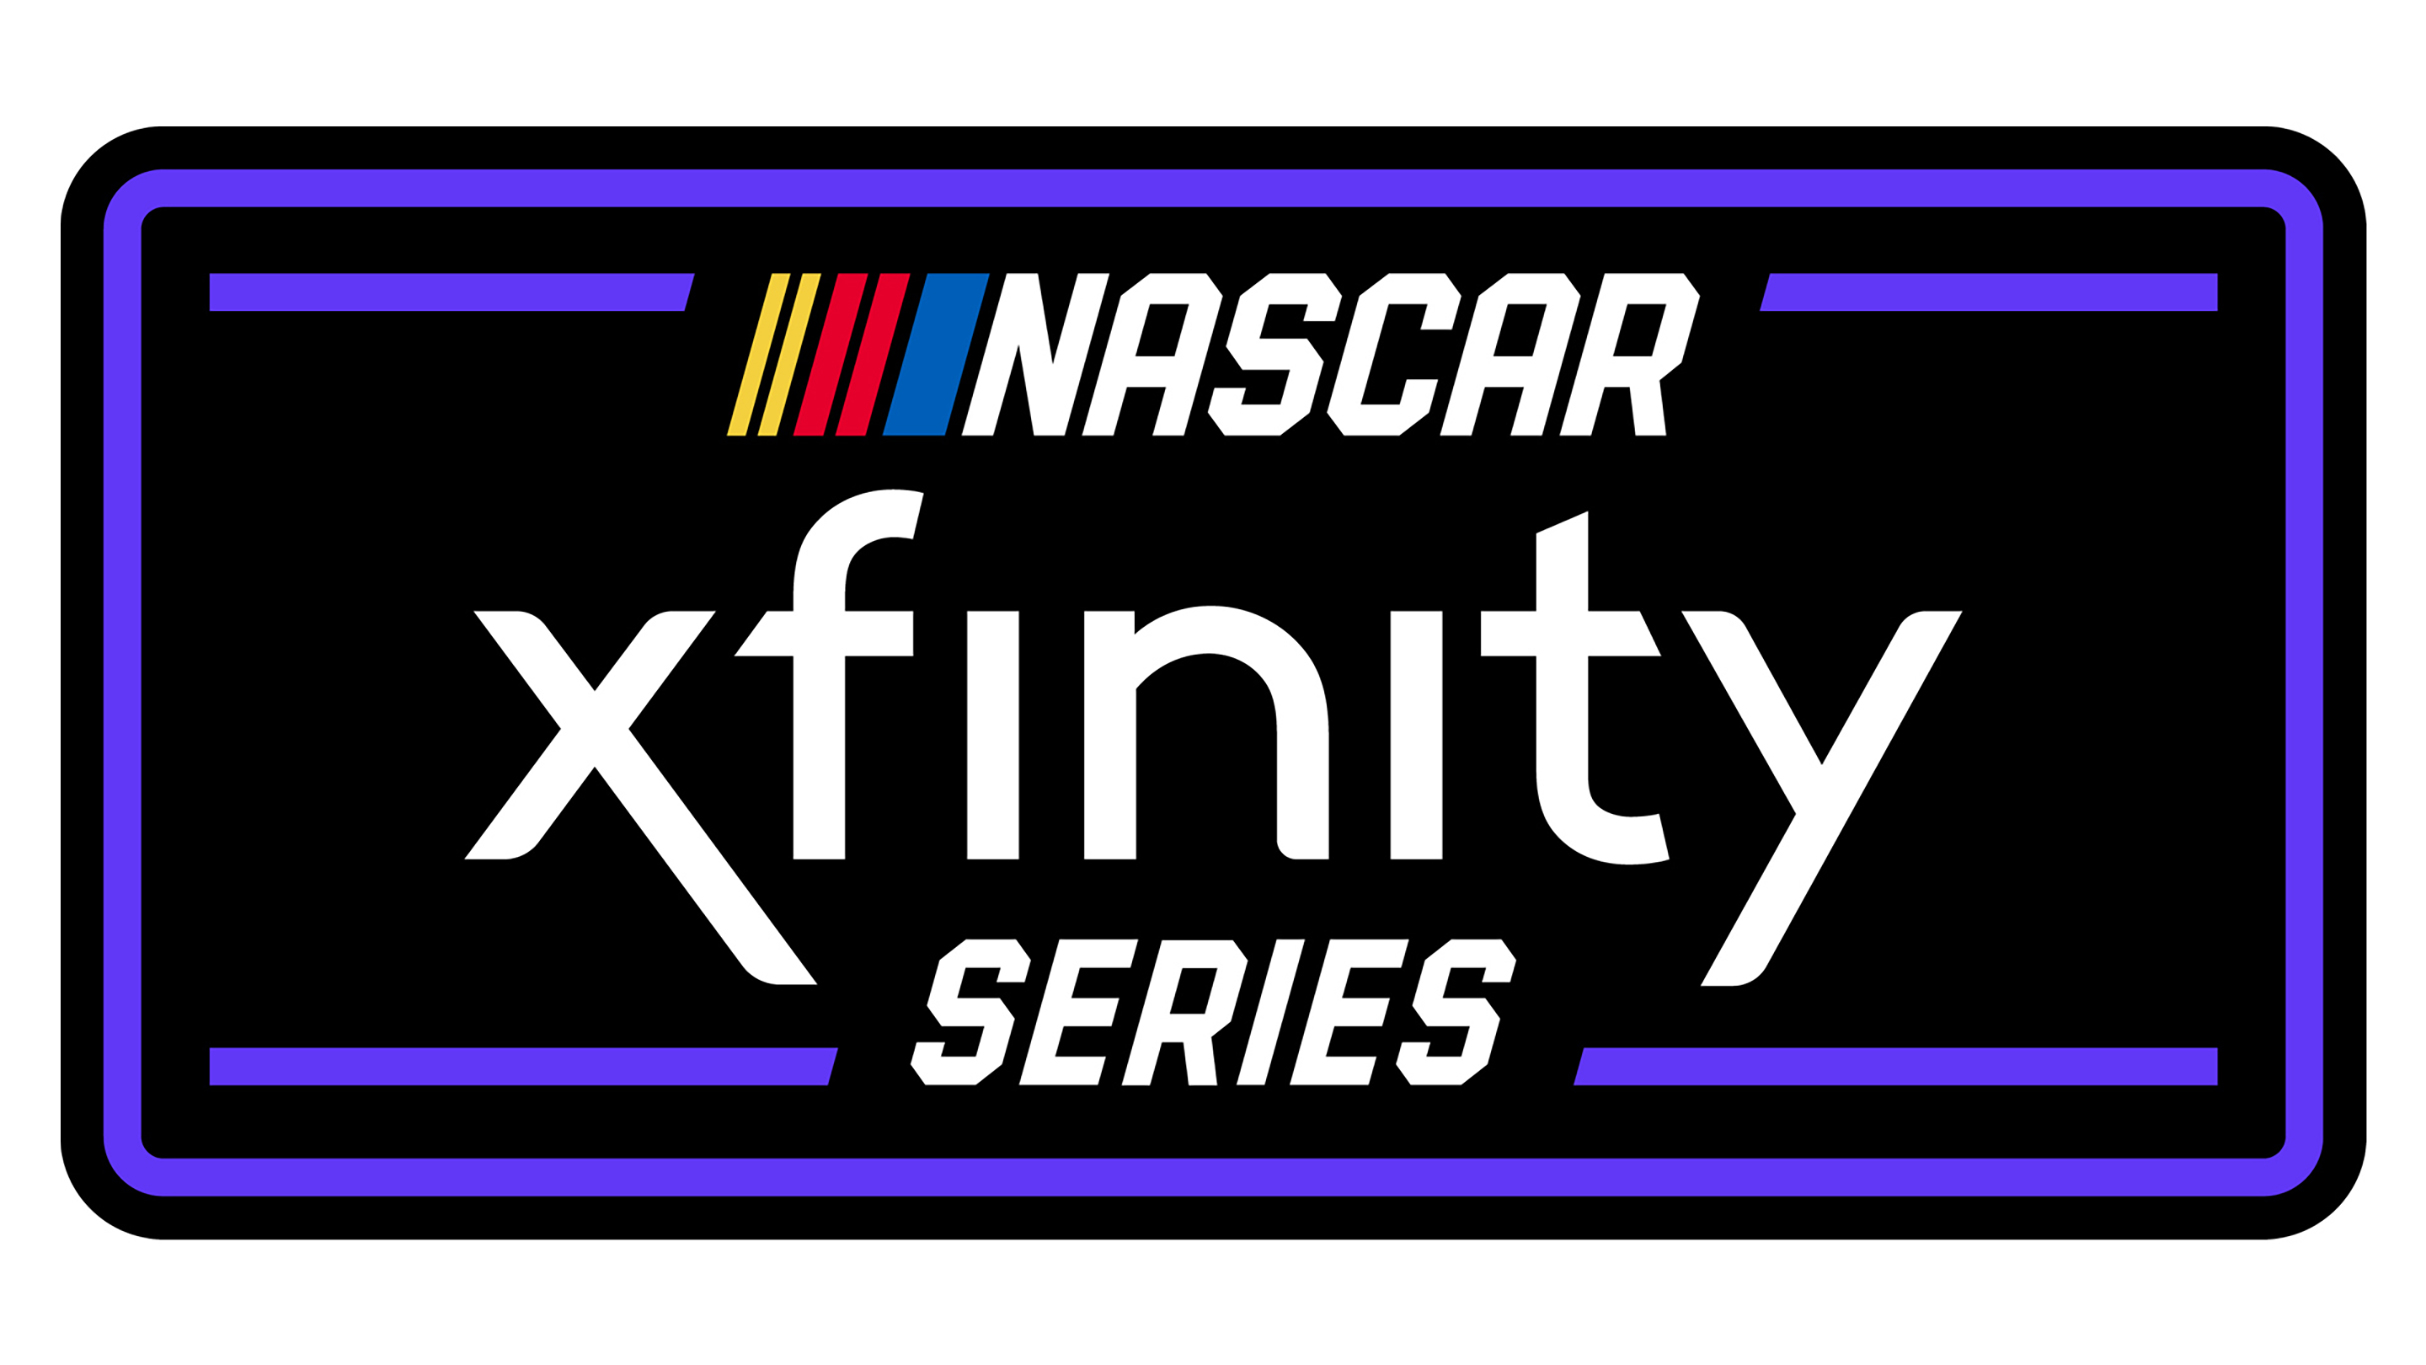 BetMGM 300 NASCAR Xfinity Series